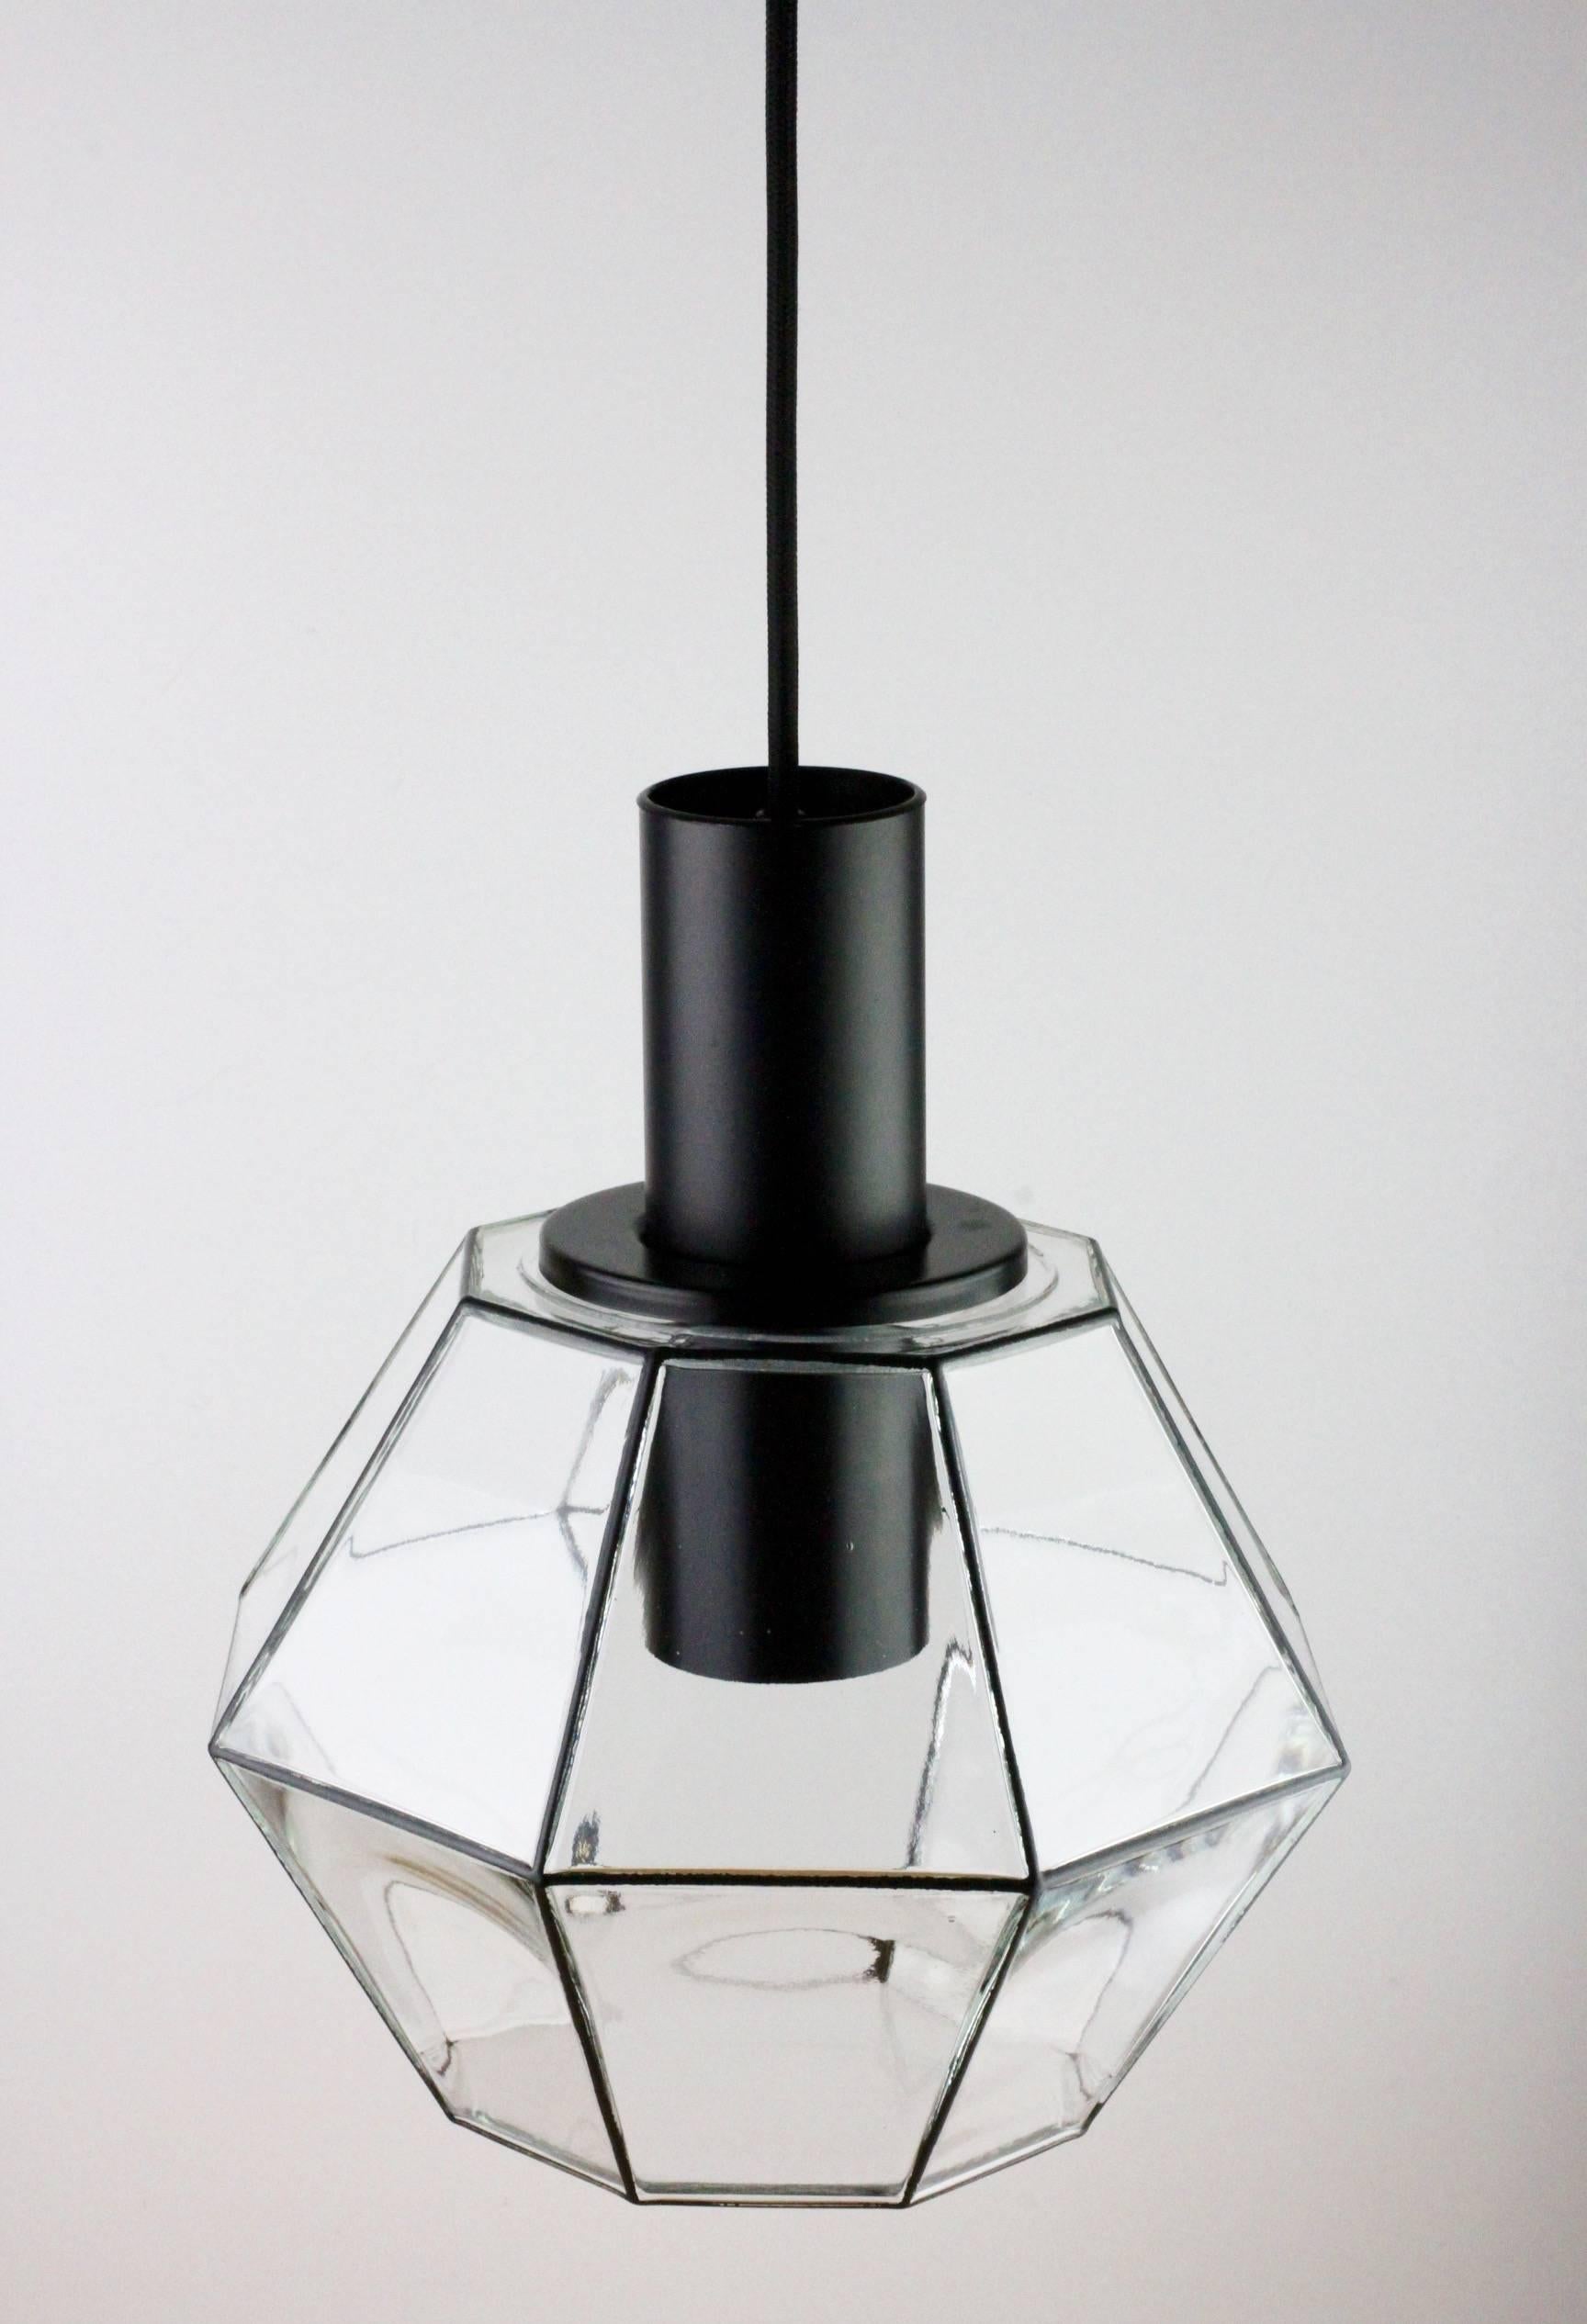 German Limburg 1 of 10 Minimalist Geometric Black & Clear Glass Pendant Lights c.1970s For Sale